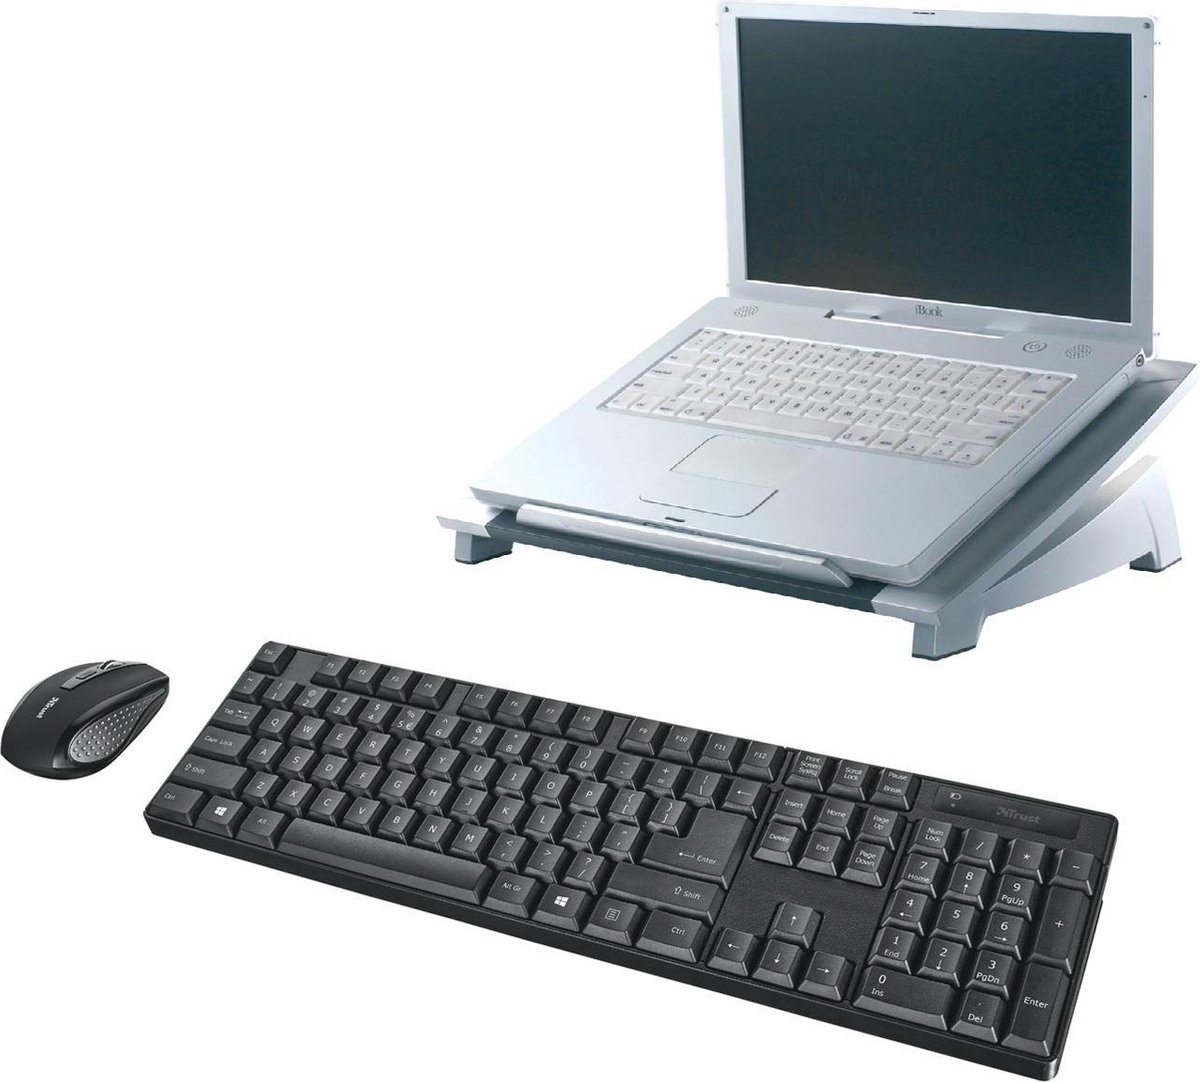 Thuiswerkpakket Laptop - Laptopstandaard + Toetsenbord + Muis | bol.com